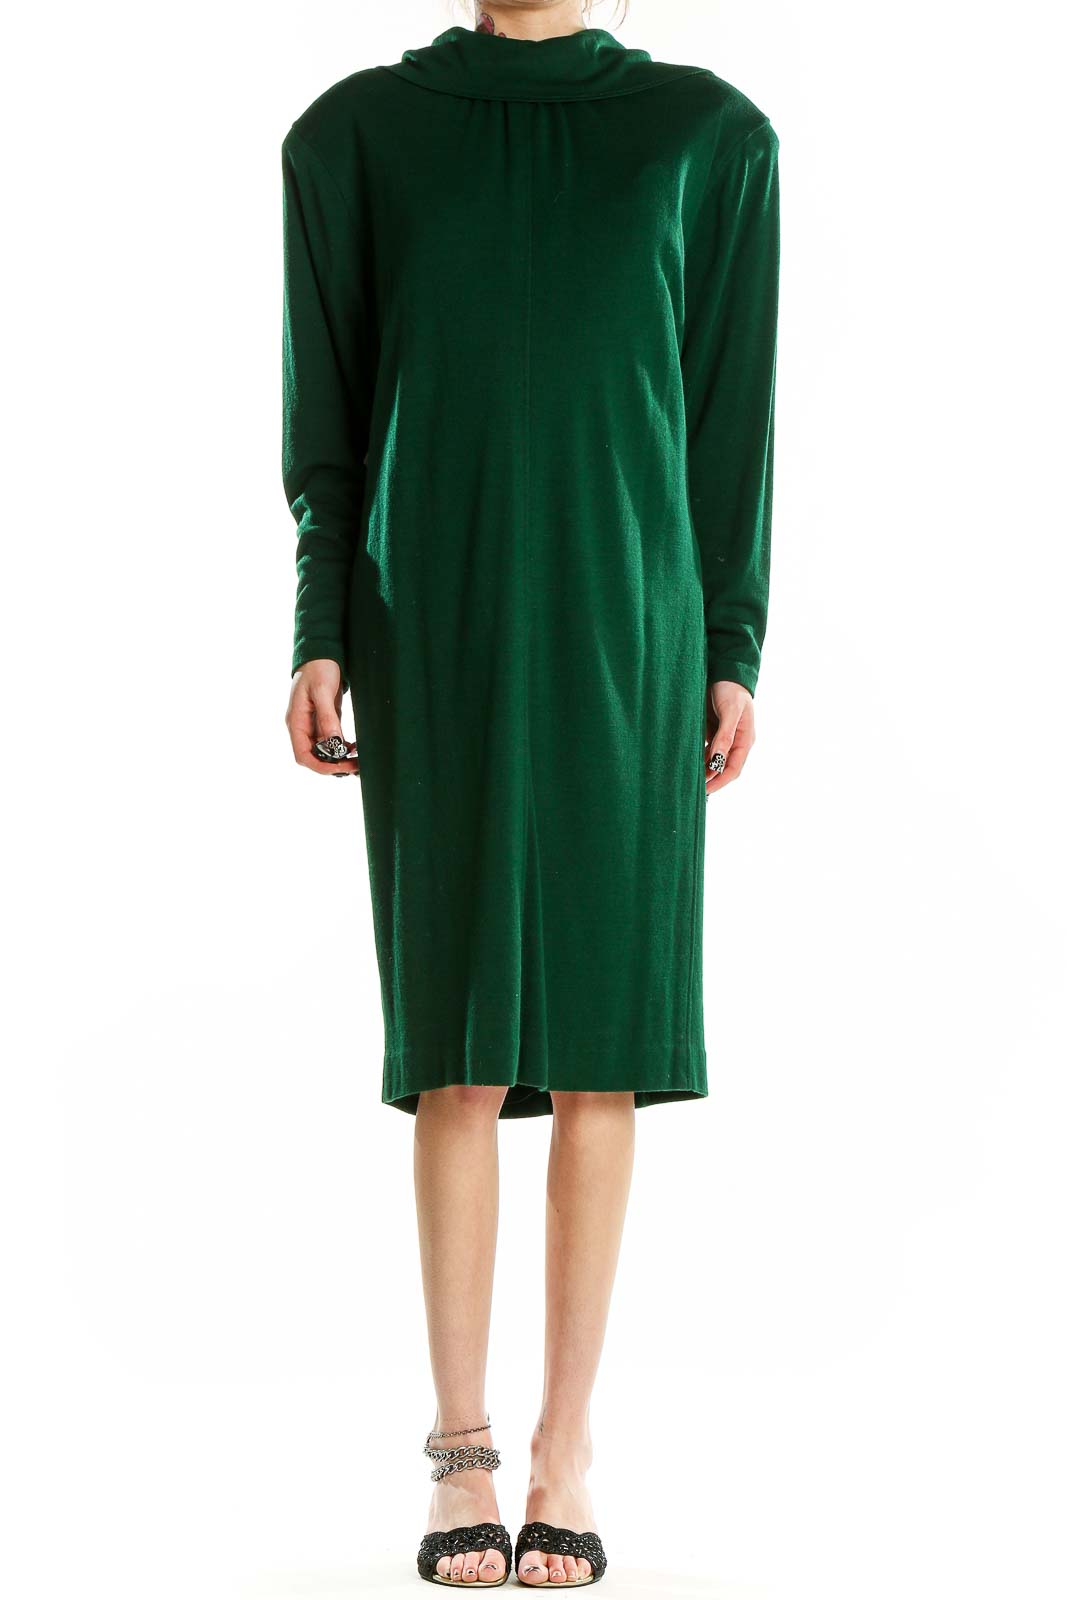 Green Vintage Knit Long Sleeve Dress Front